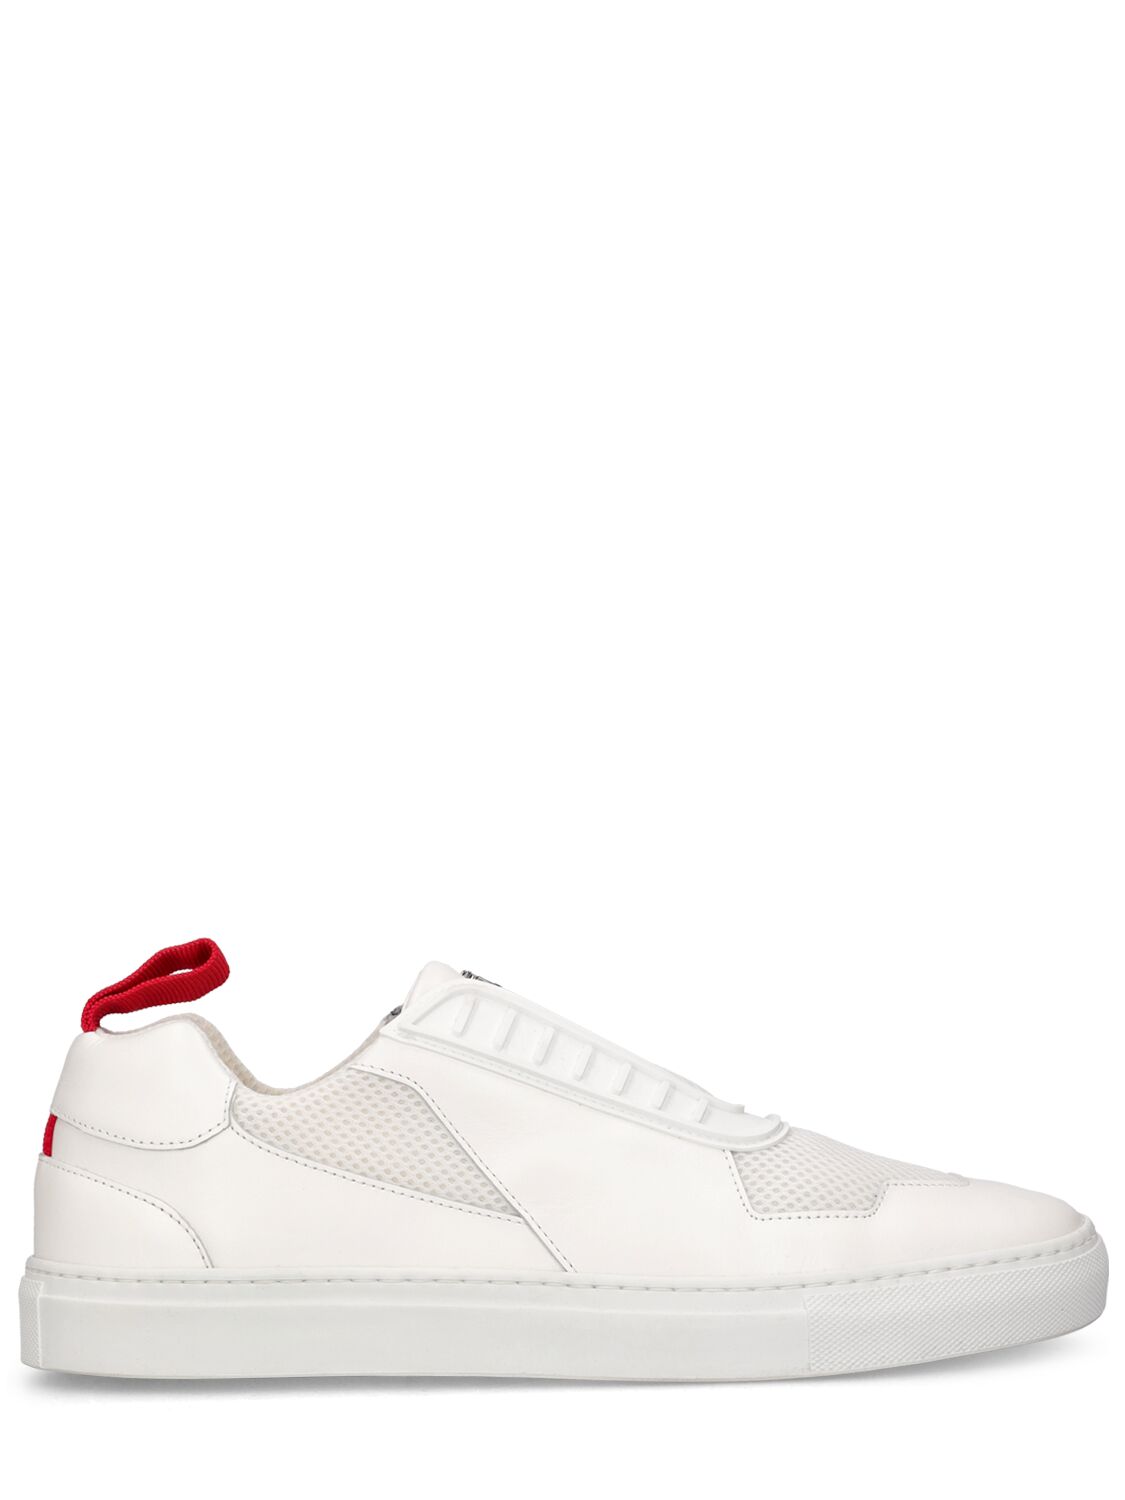 Ferrari Logo Leather Low Top Sneakers In White